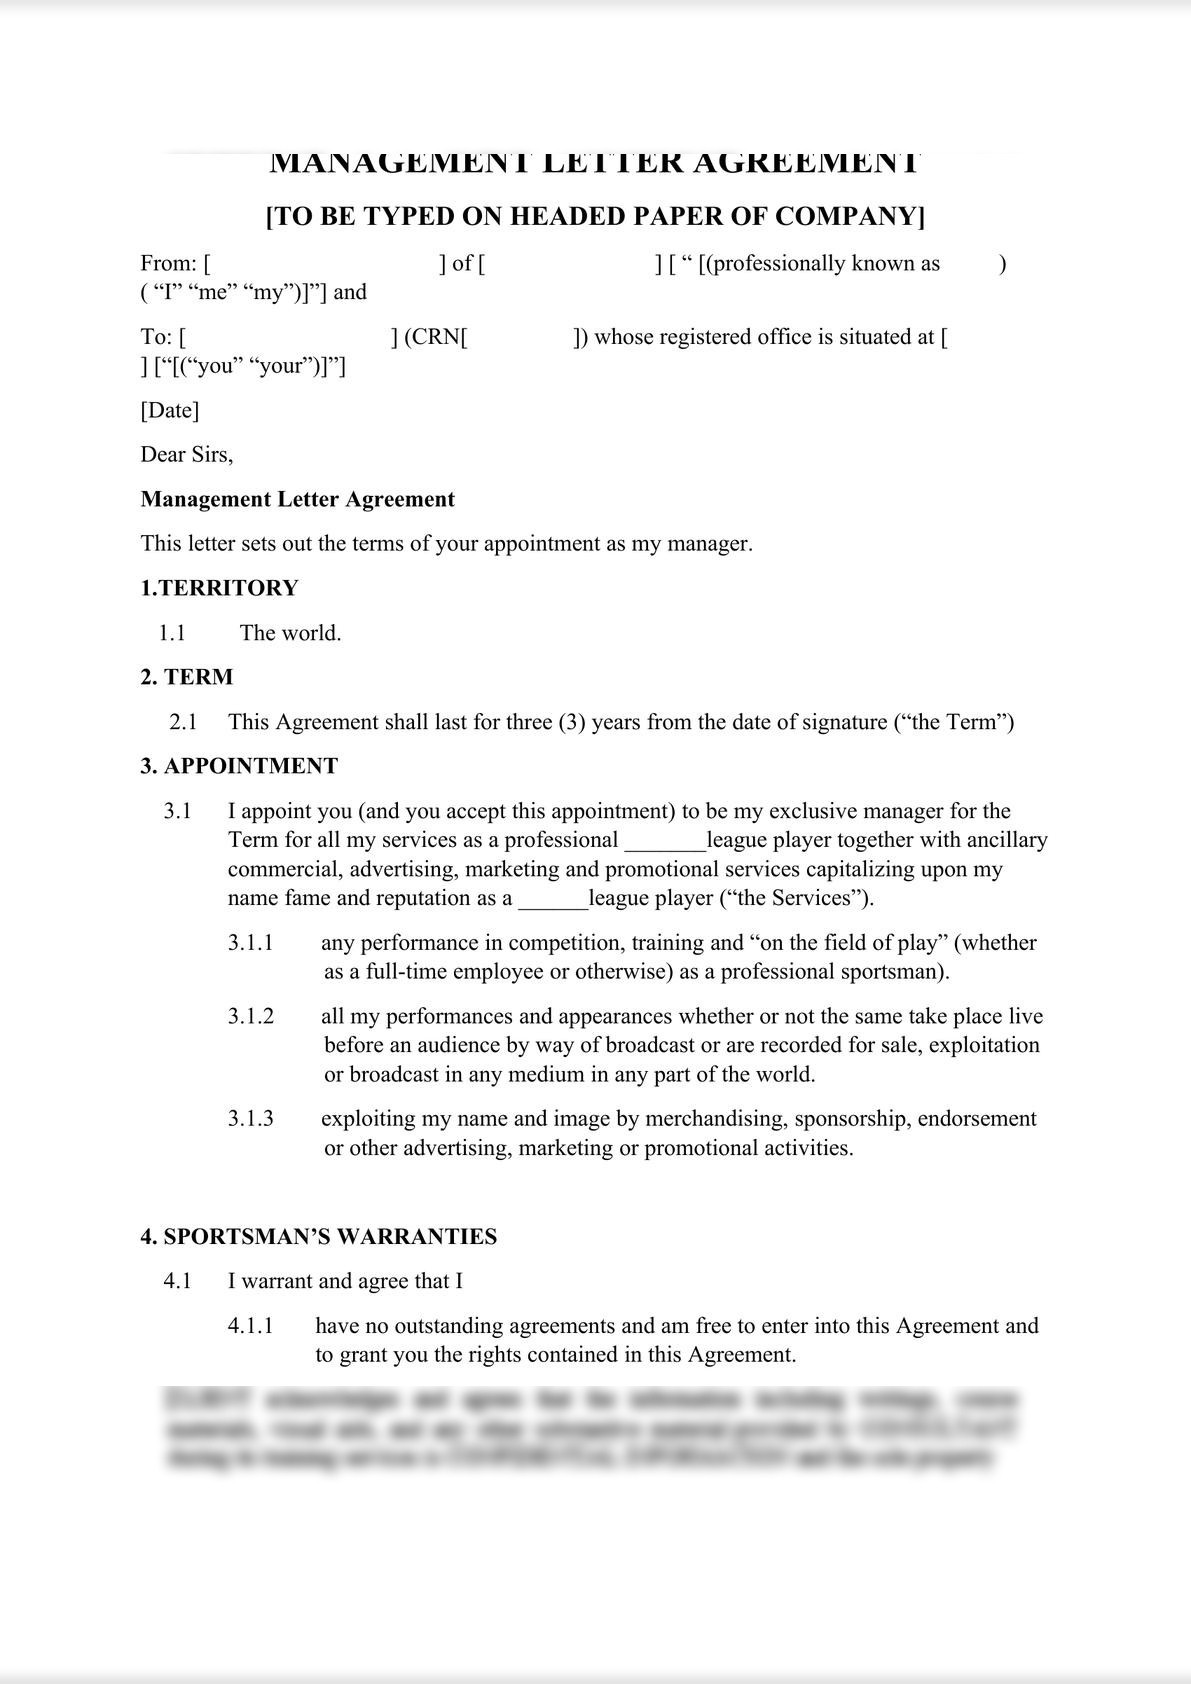 Management Letter Agreement (Sports Law)-0